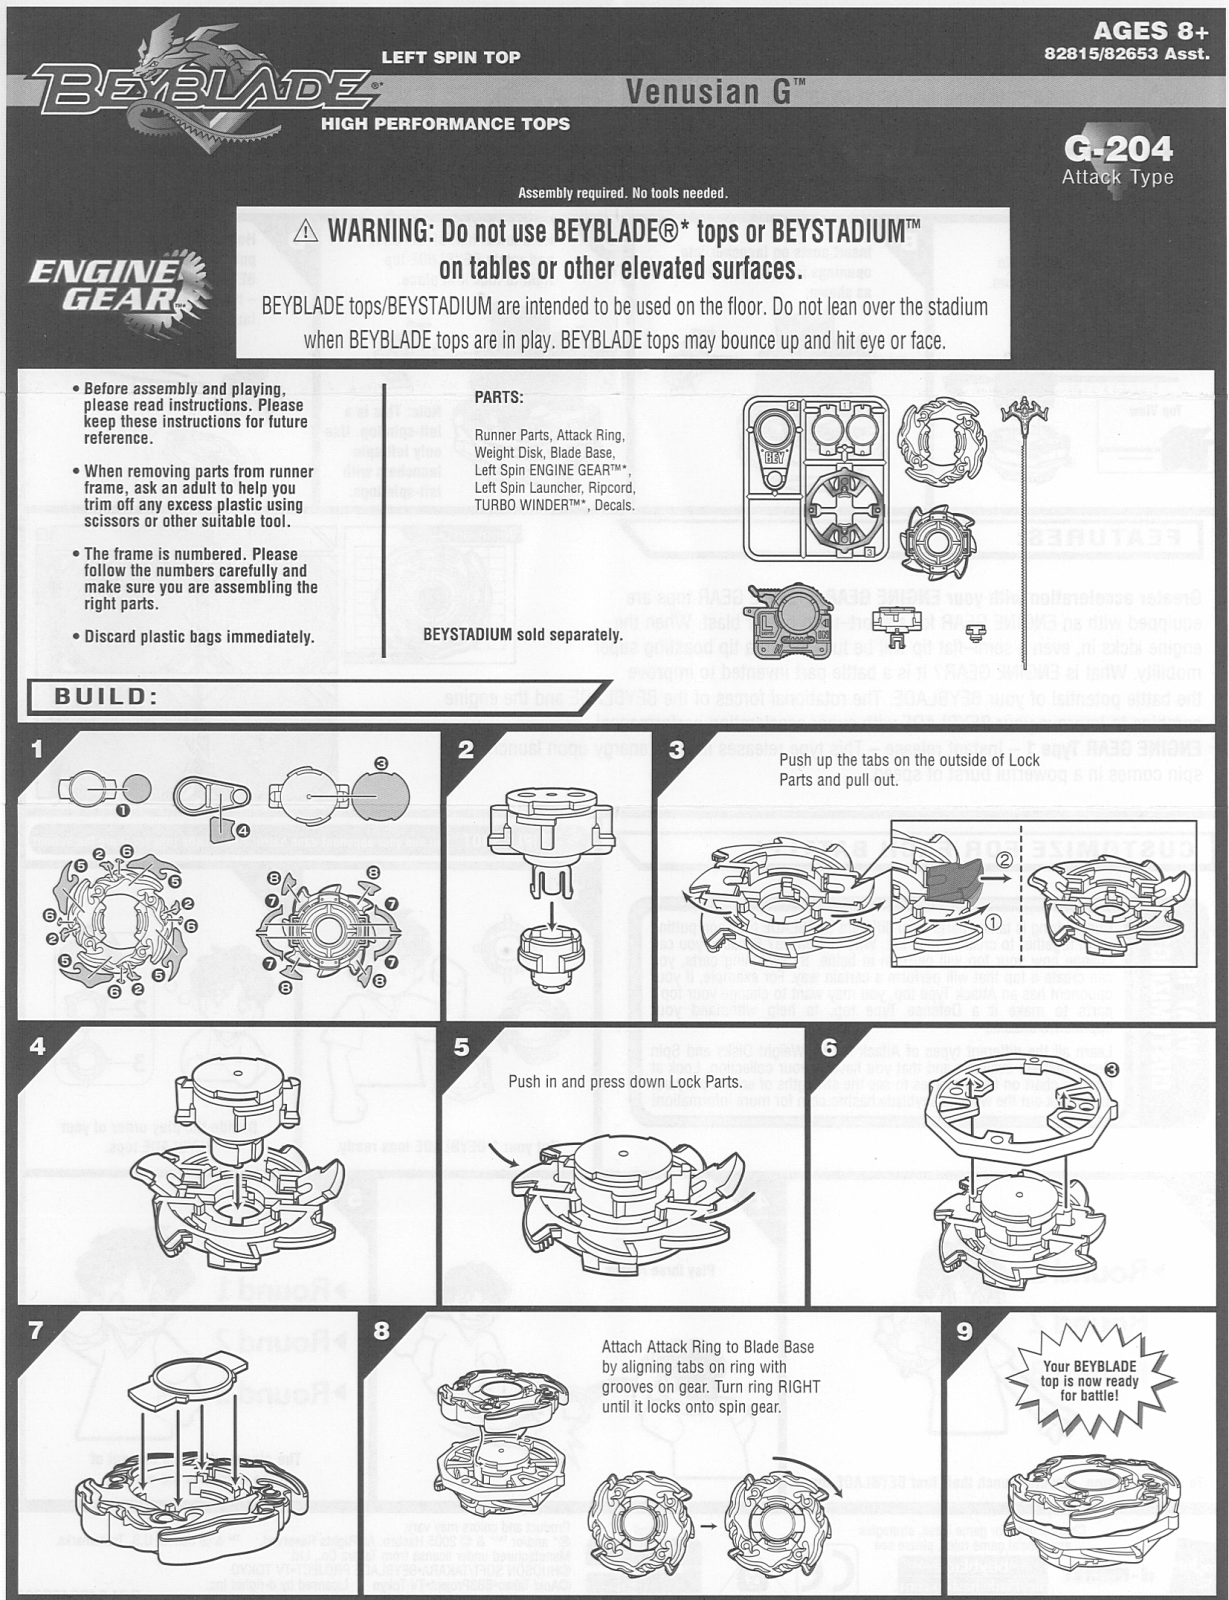 HASBRO Beyblade Venusian G Engine Gear User Manual